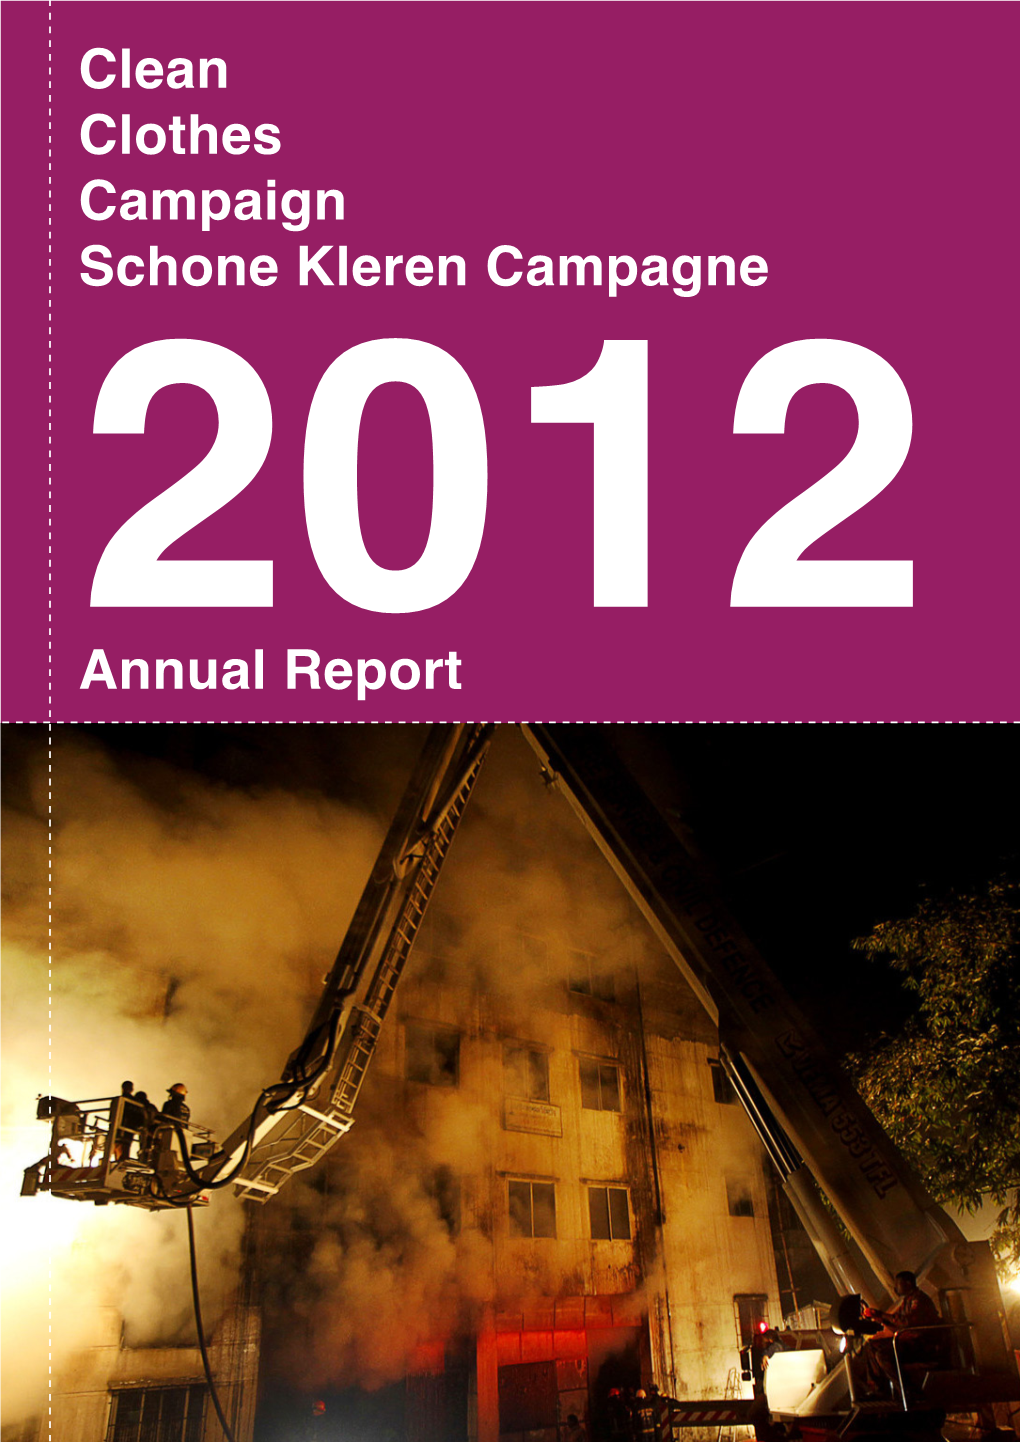 Annual Report Clean Clothes Campaign Schone Kleren Campagne